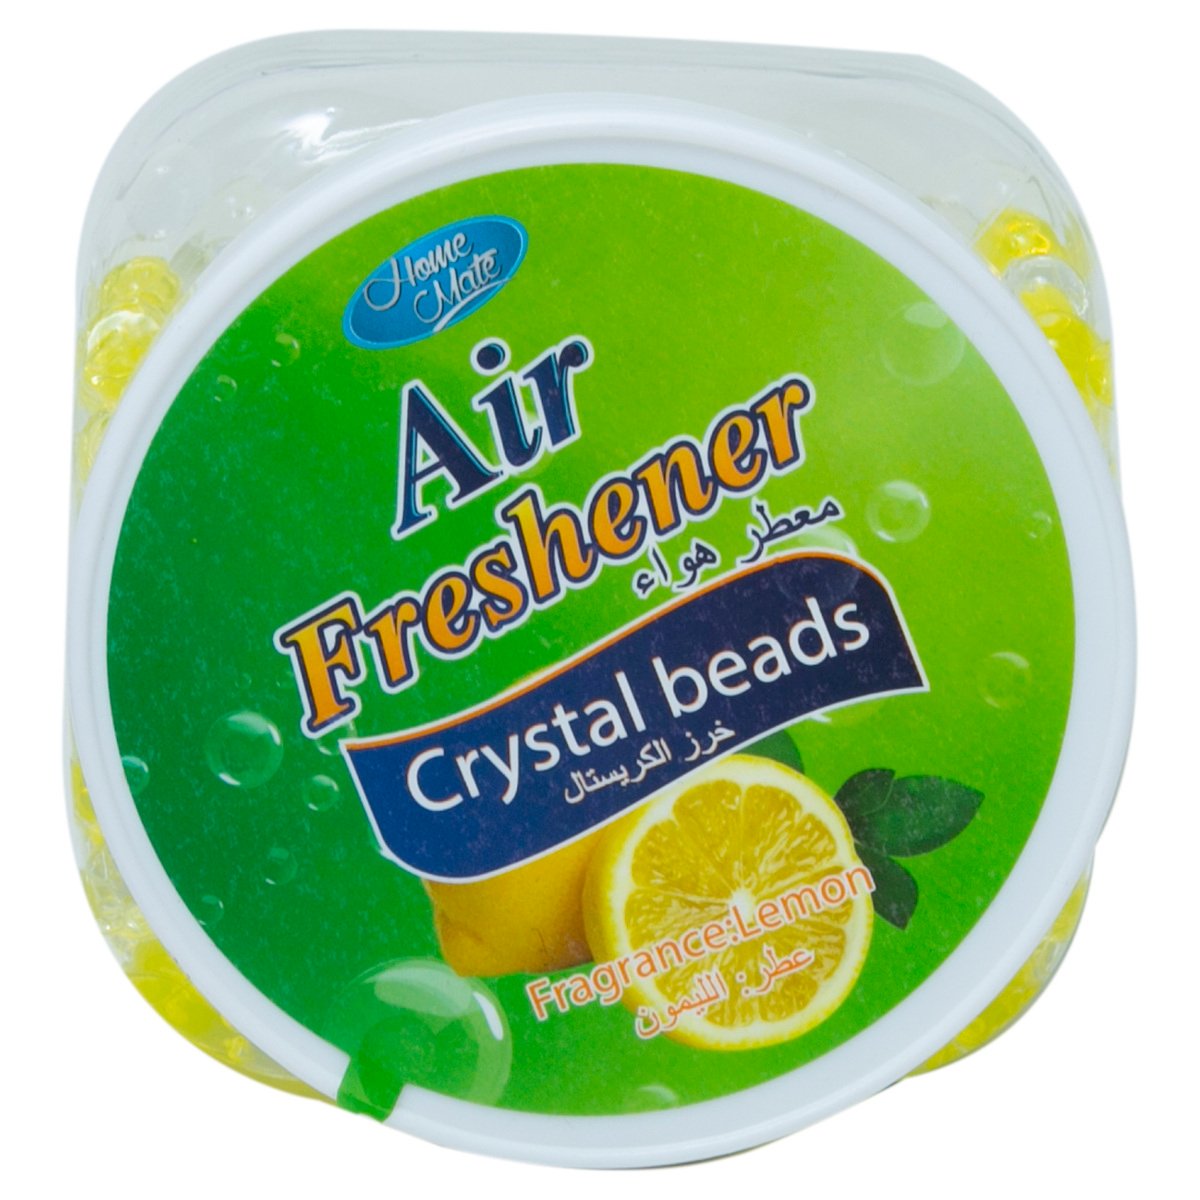 Home Mate Air Freshener Lemon 230g